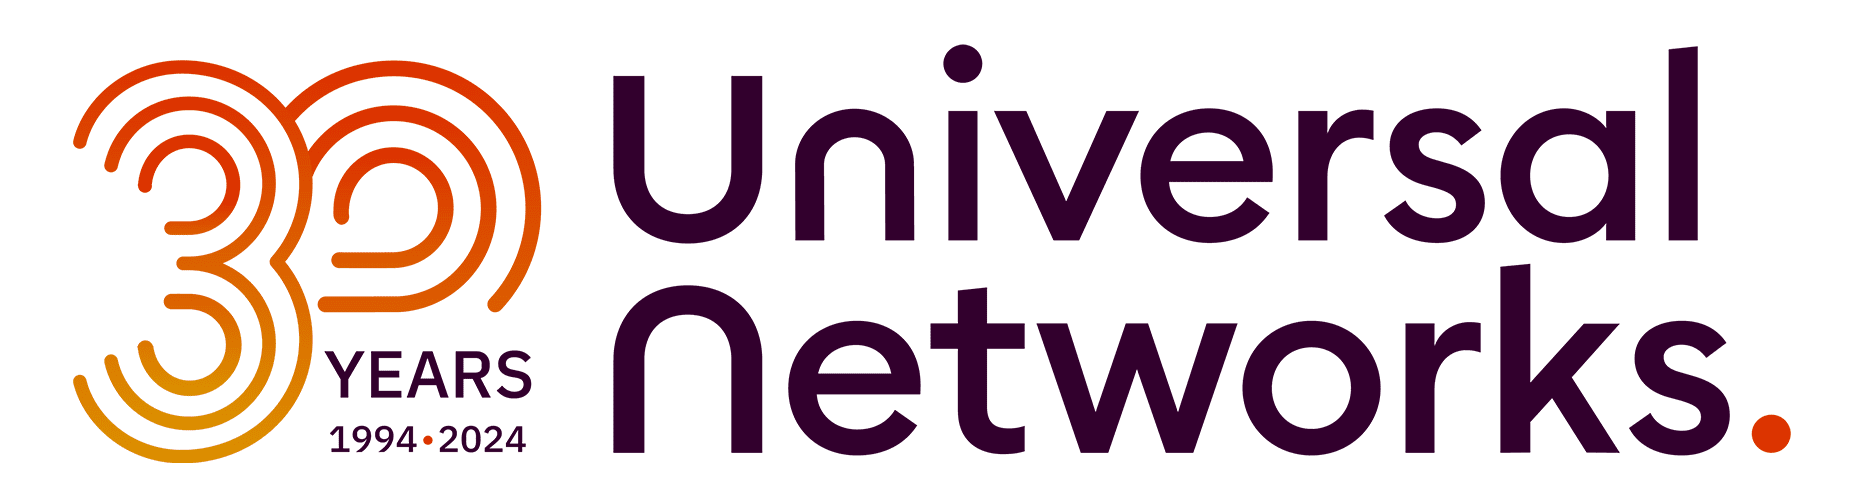 Universal Networks